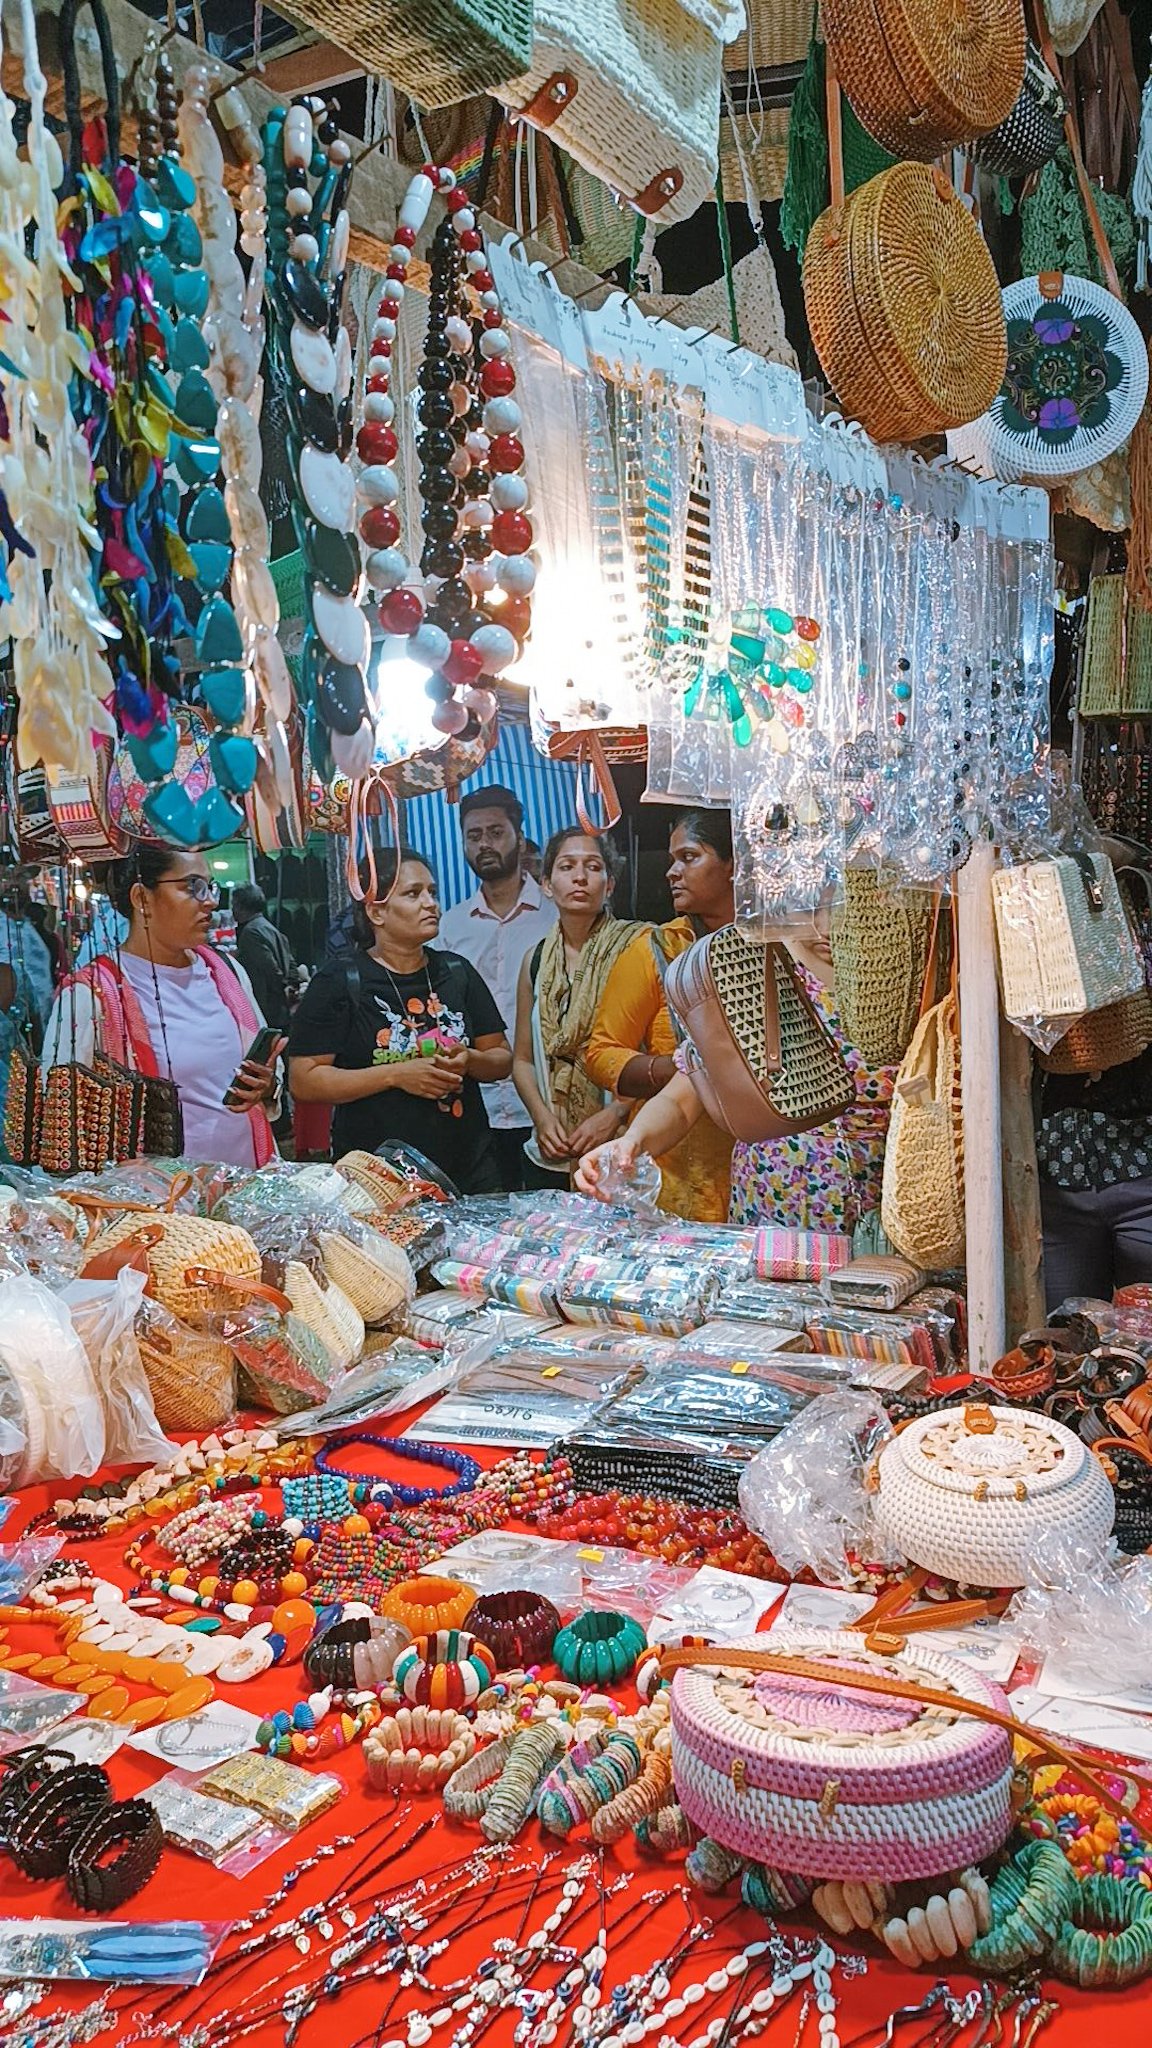 Anjuna flea market: Explore the vibrant Goan market